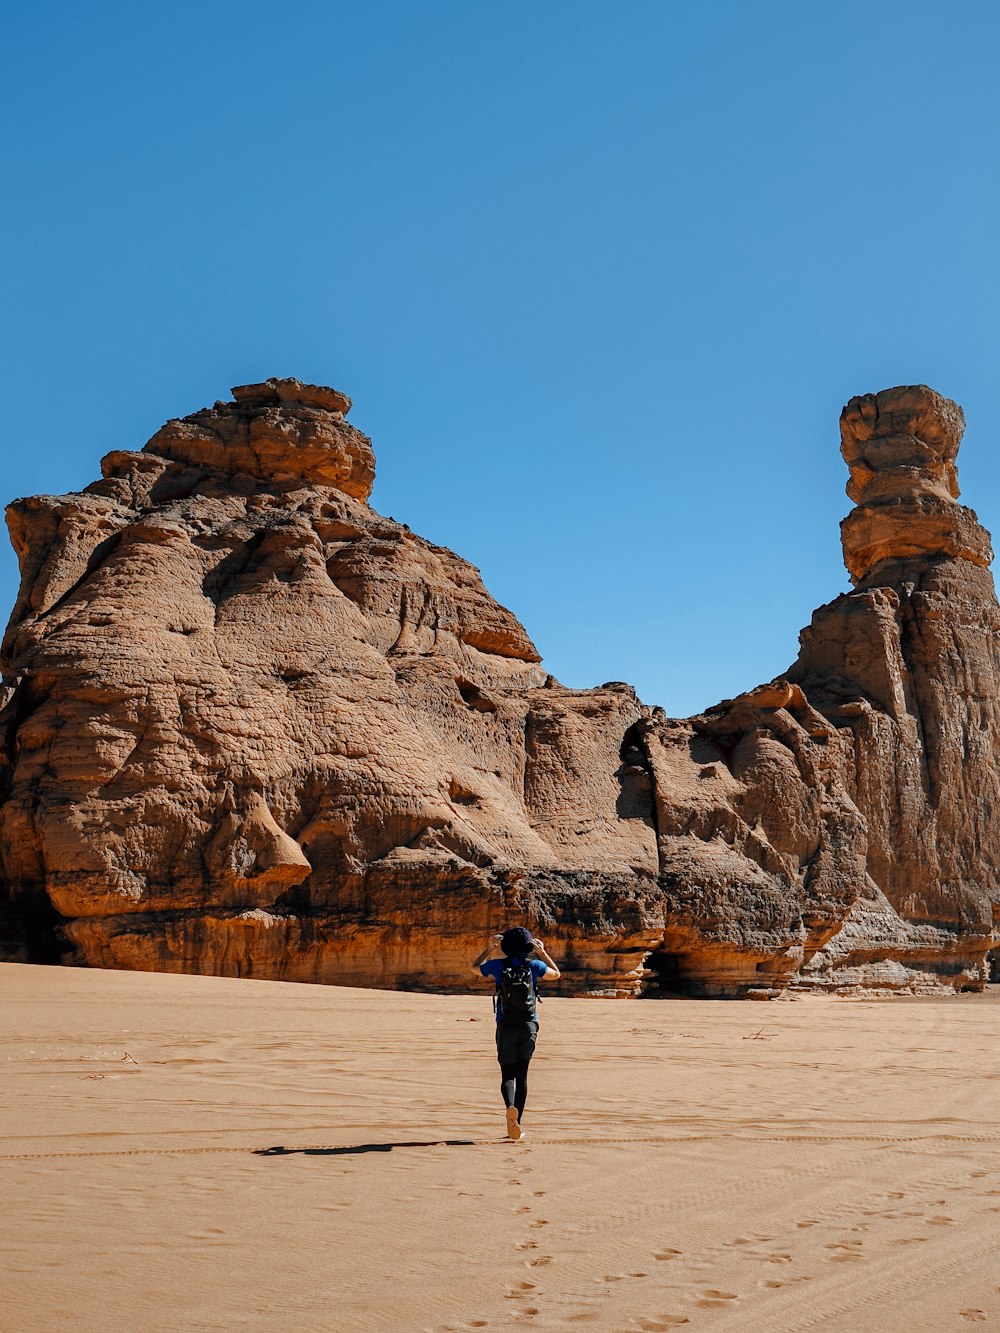 a person walking across a sandy beach next to large rocks